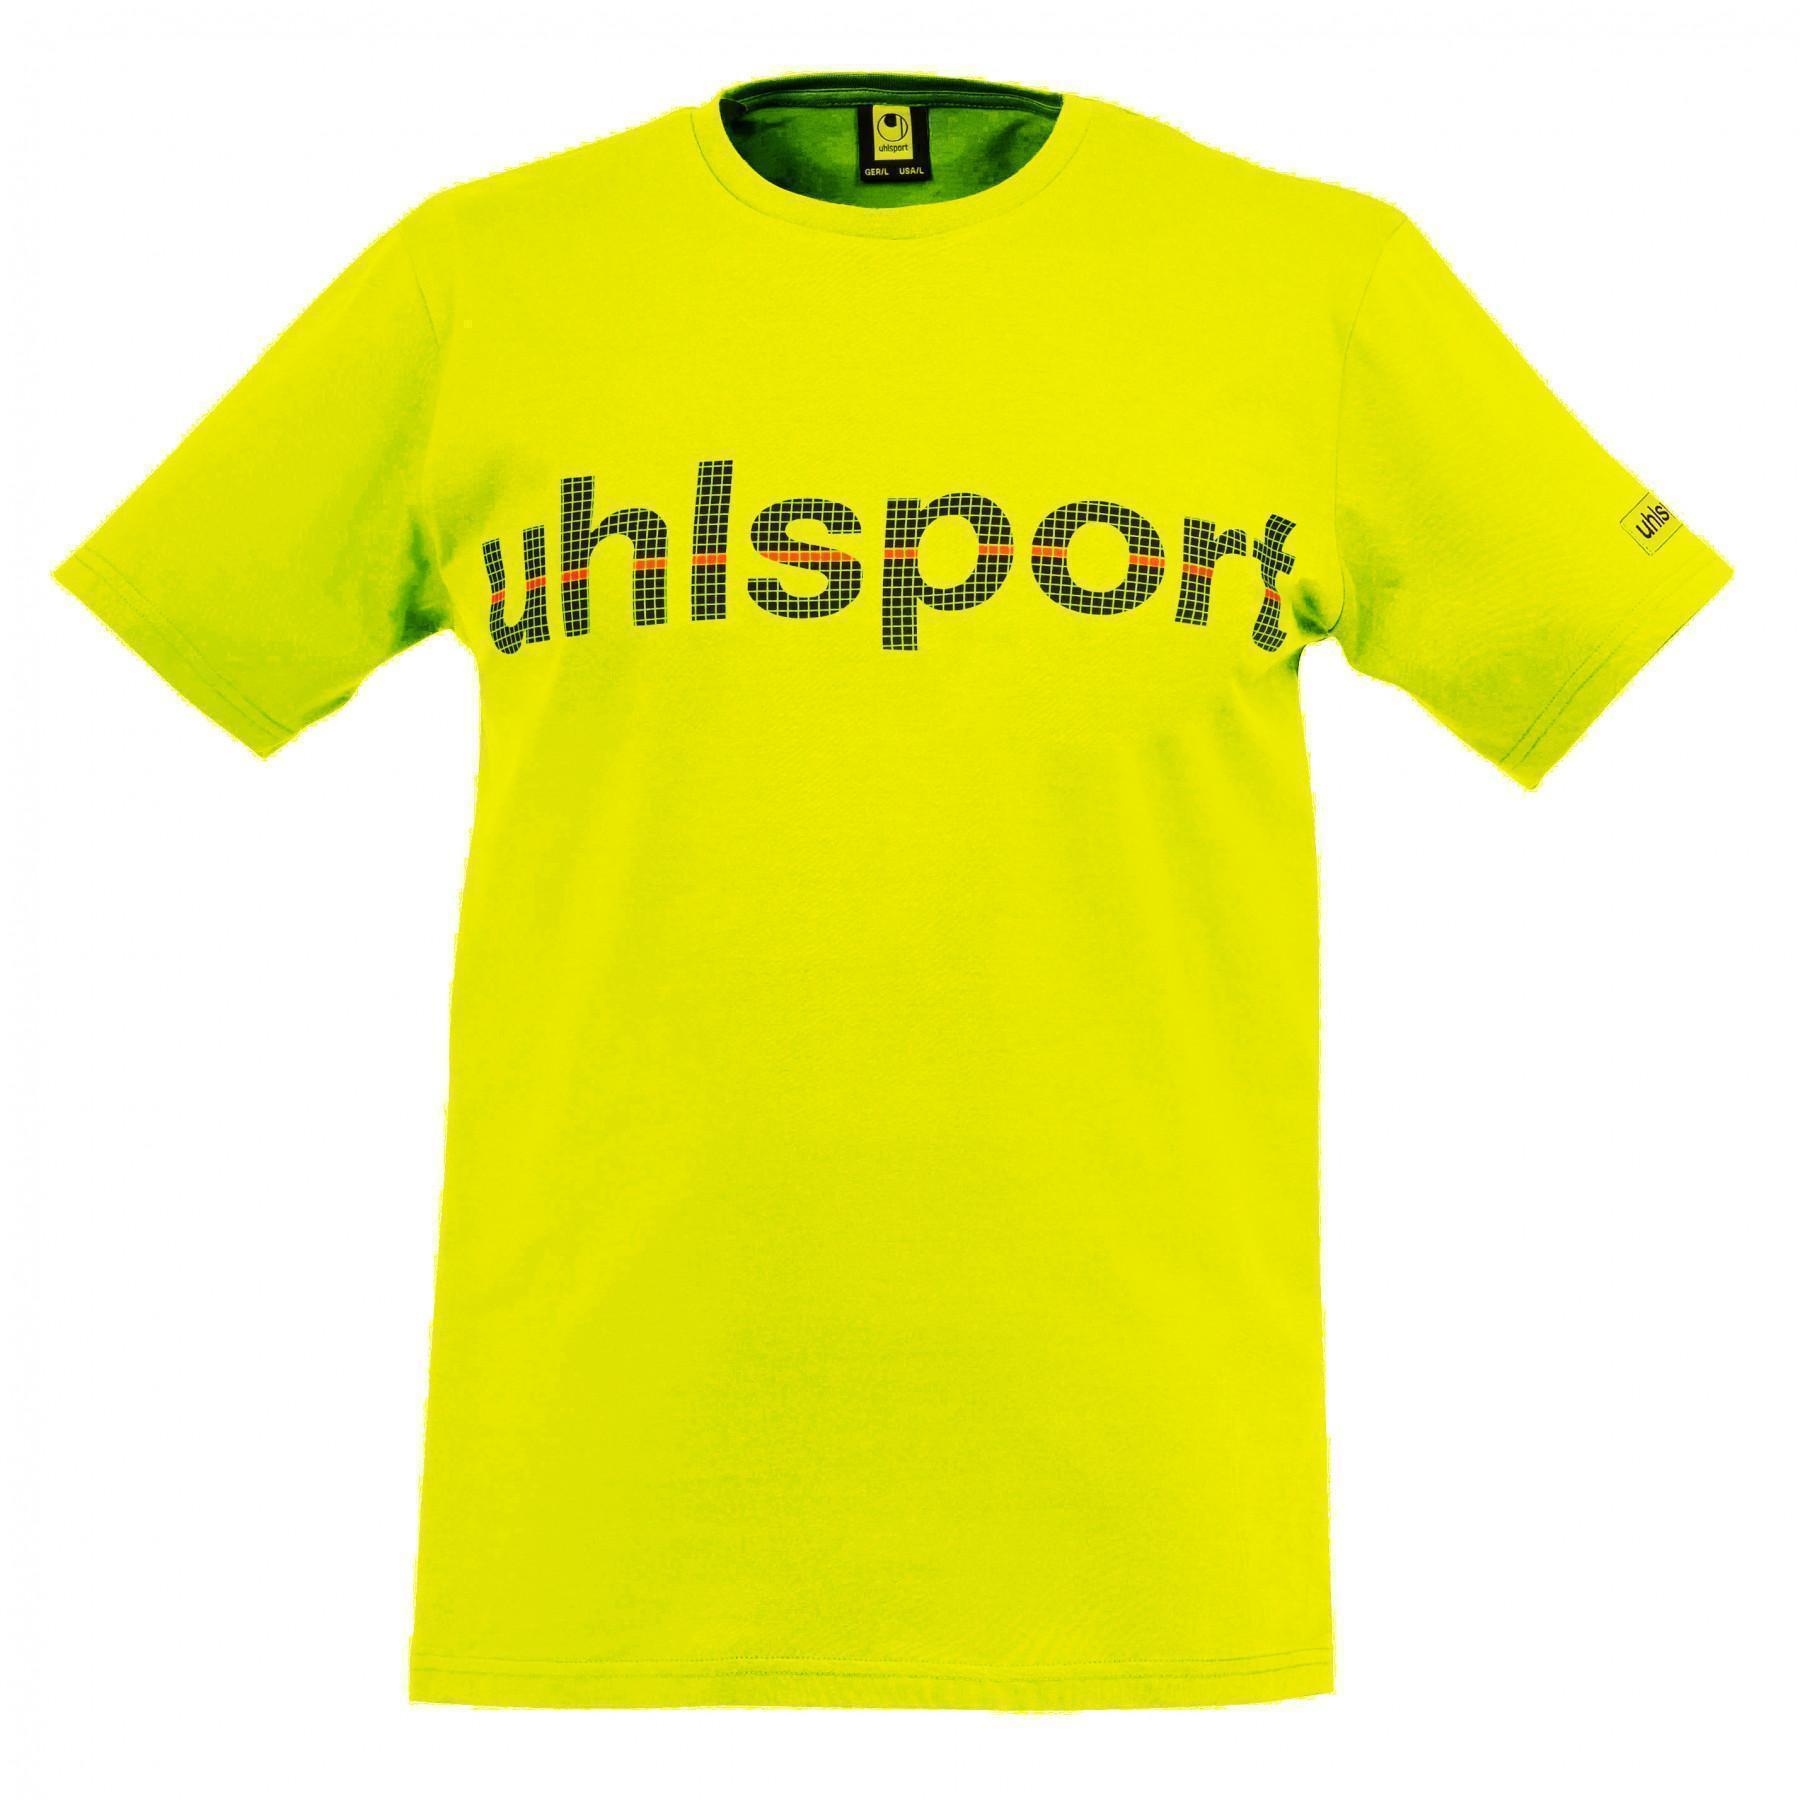 Promotioneel T-shirt Uhlsport Essential